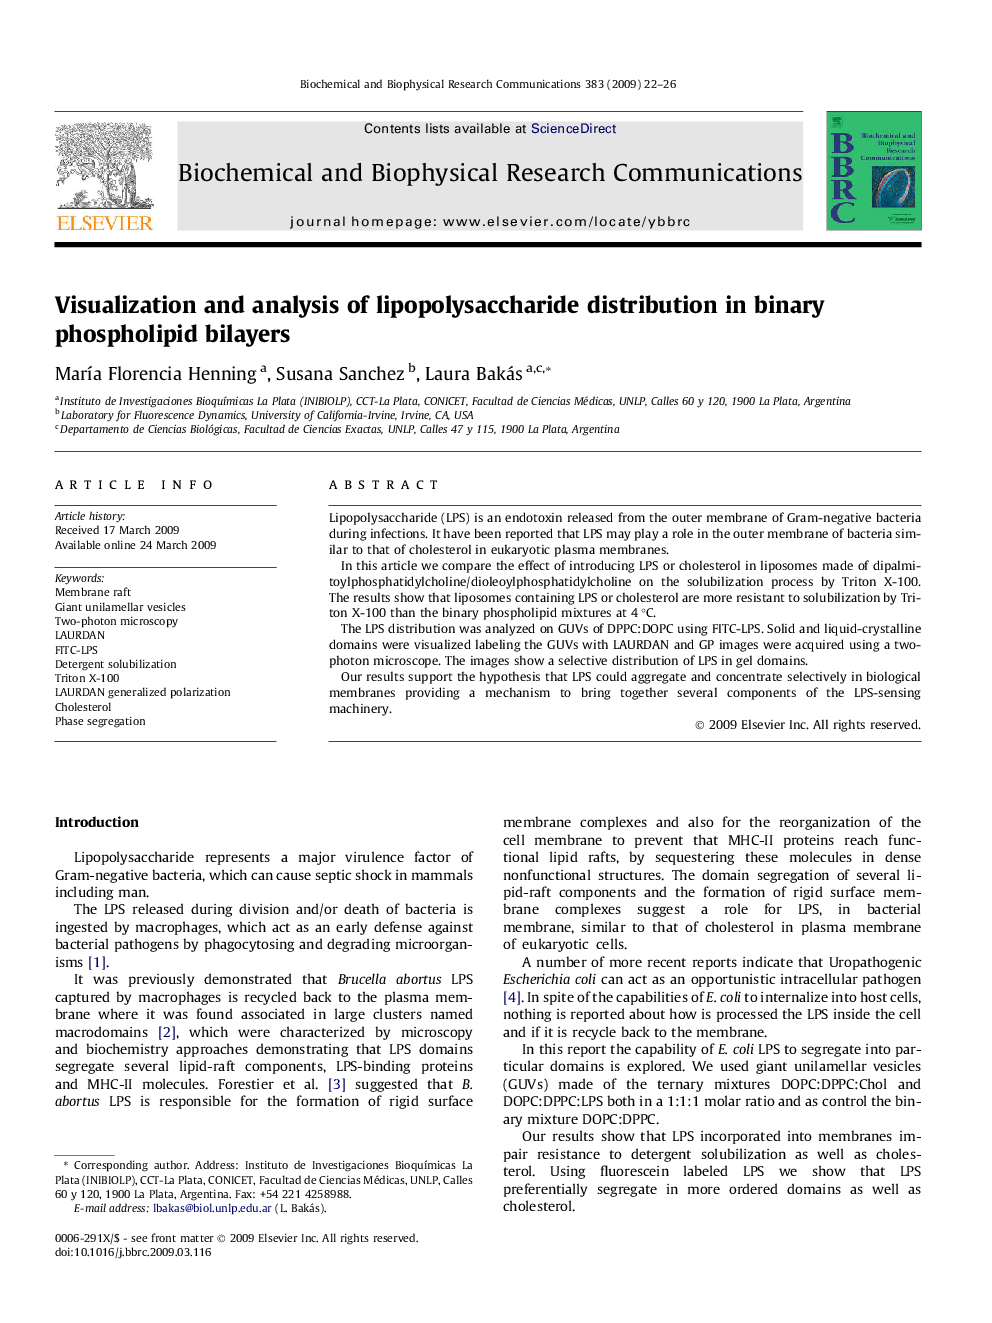 Visualization and analysis of lipopolysaccharide distribution in binary phospholipid bilayers